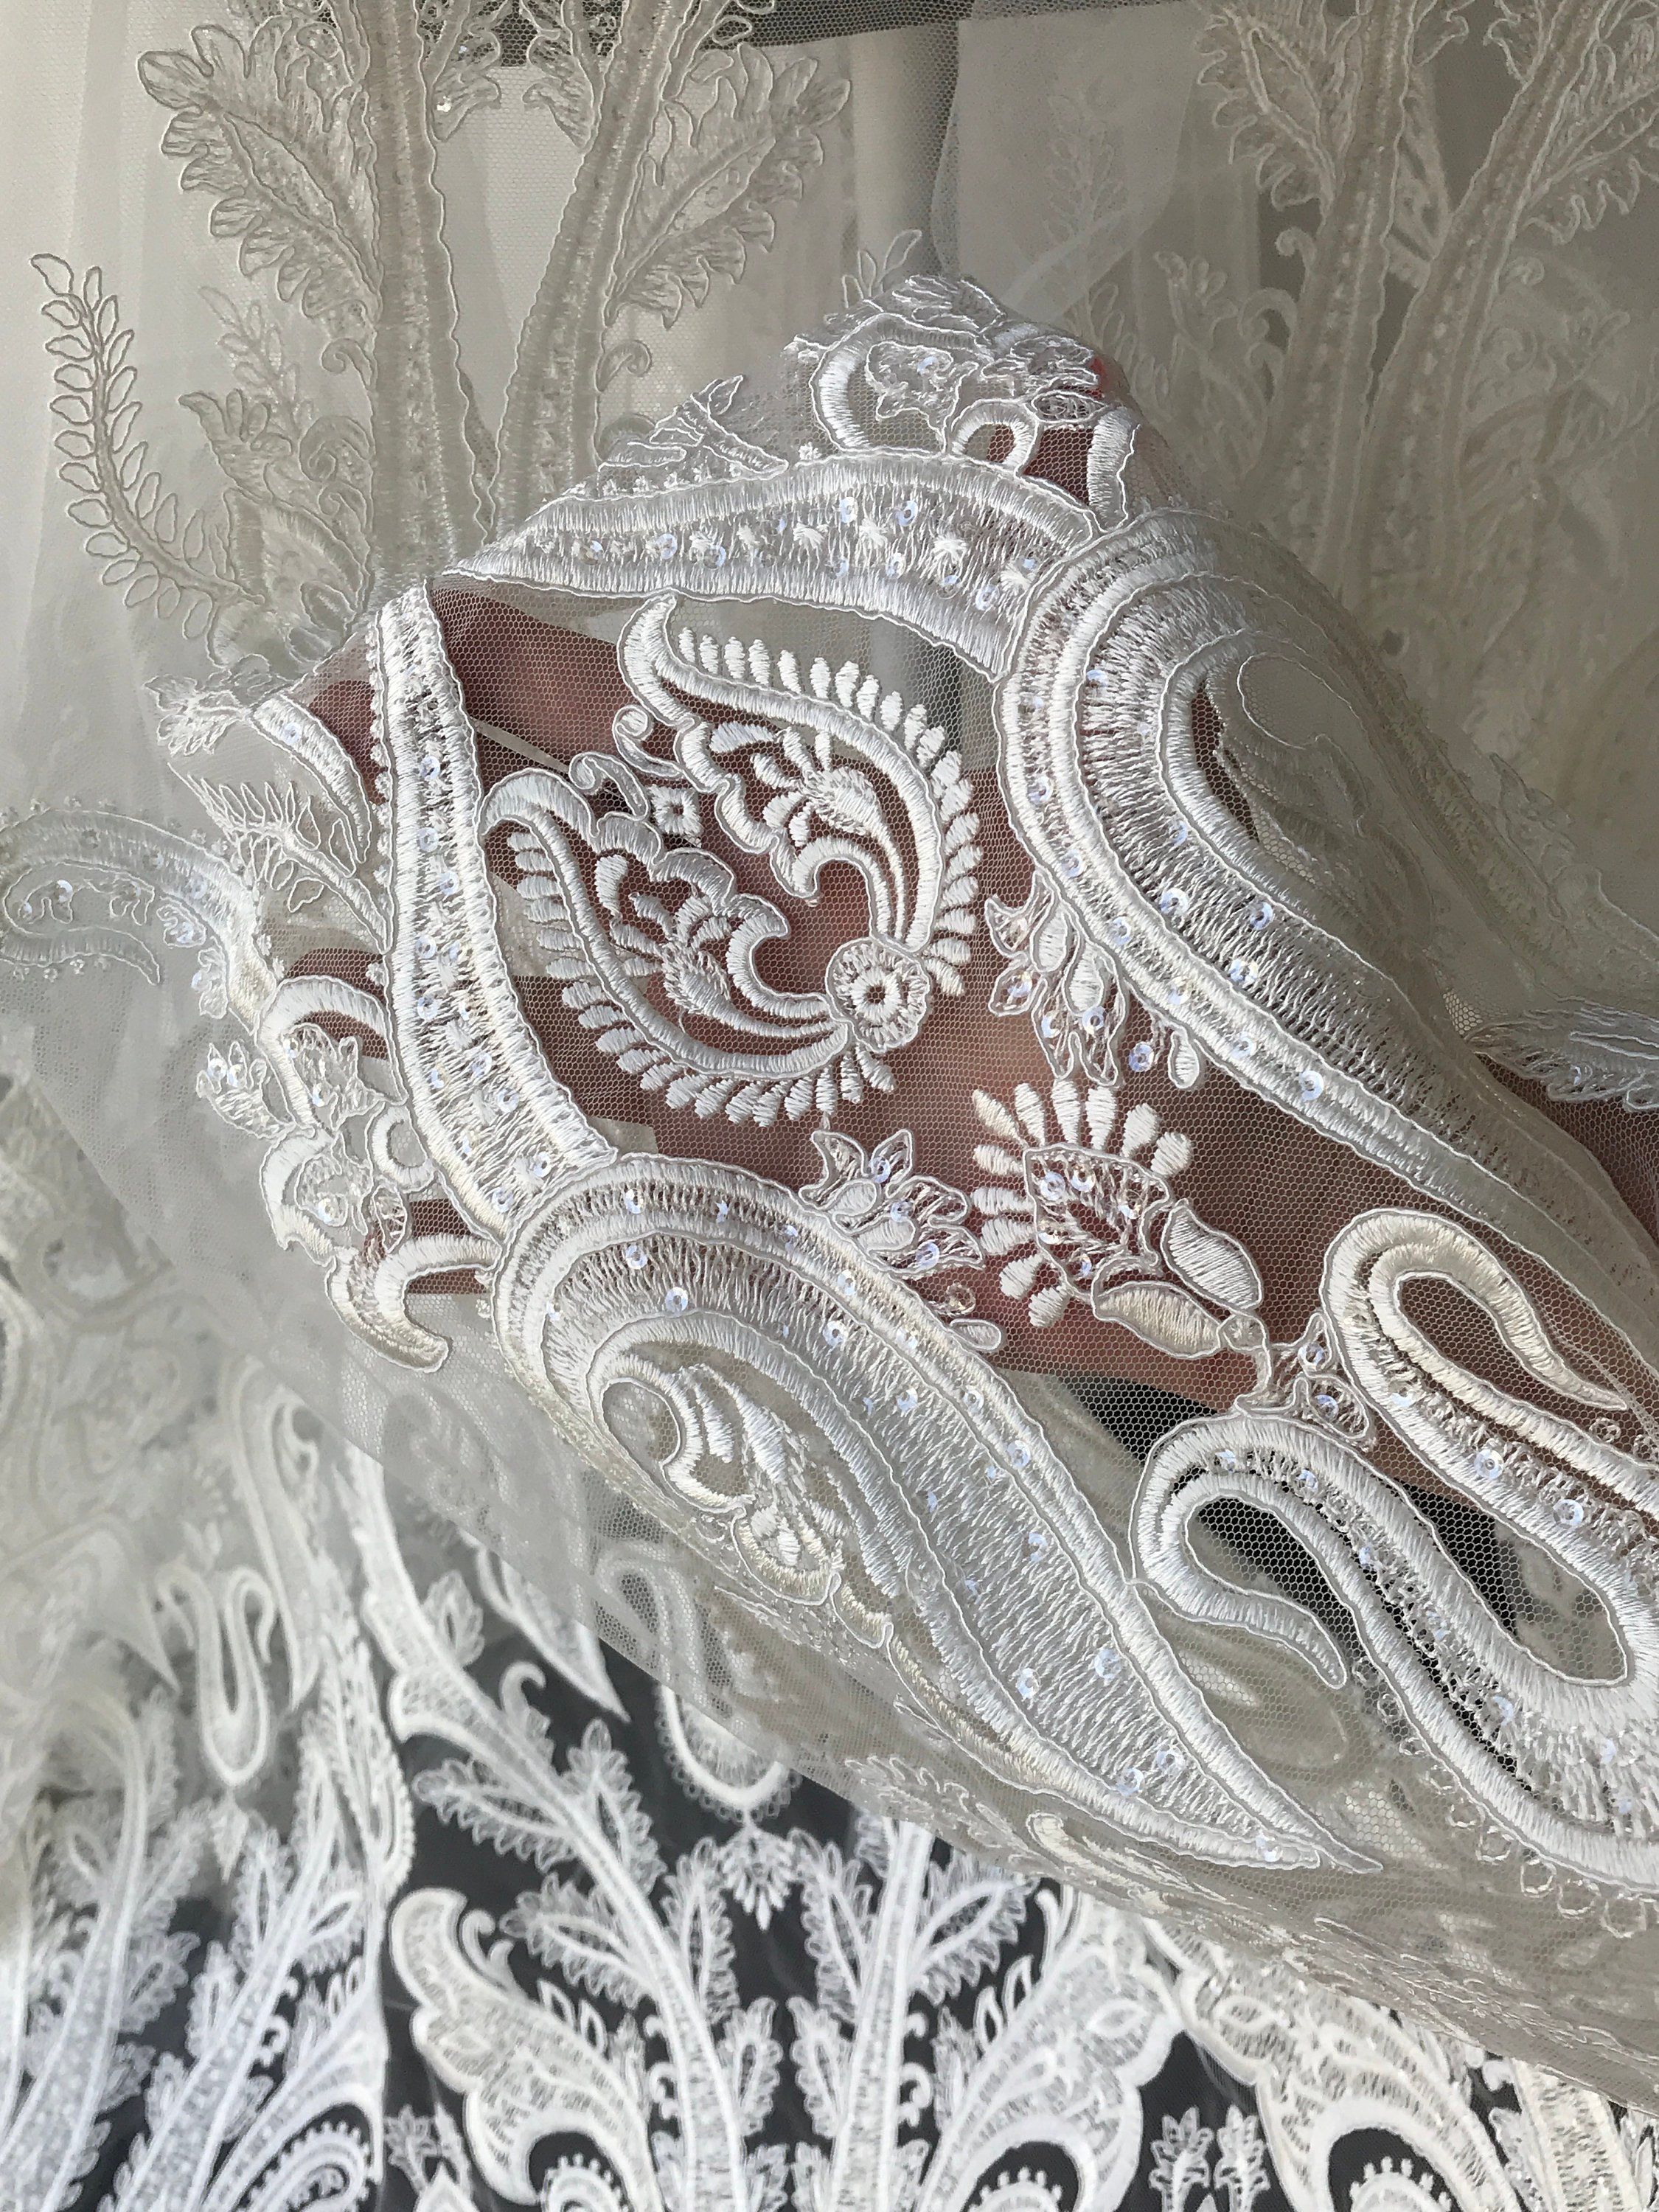 Off White Wedding Corded Lace Fabric, Ivory Lace Fabric, Wedding